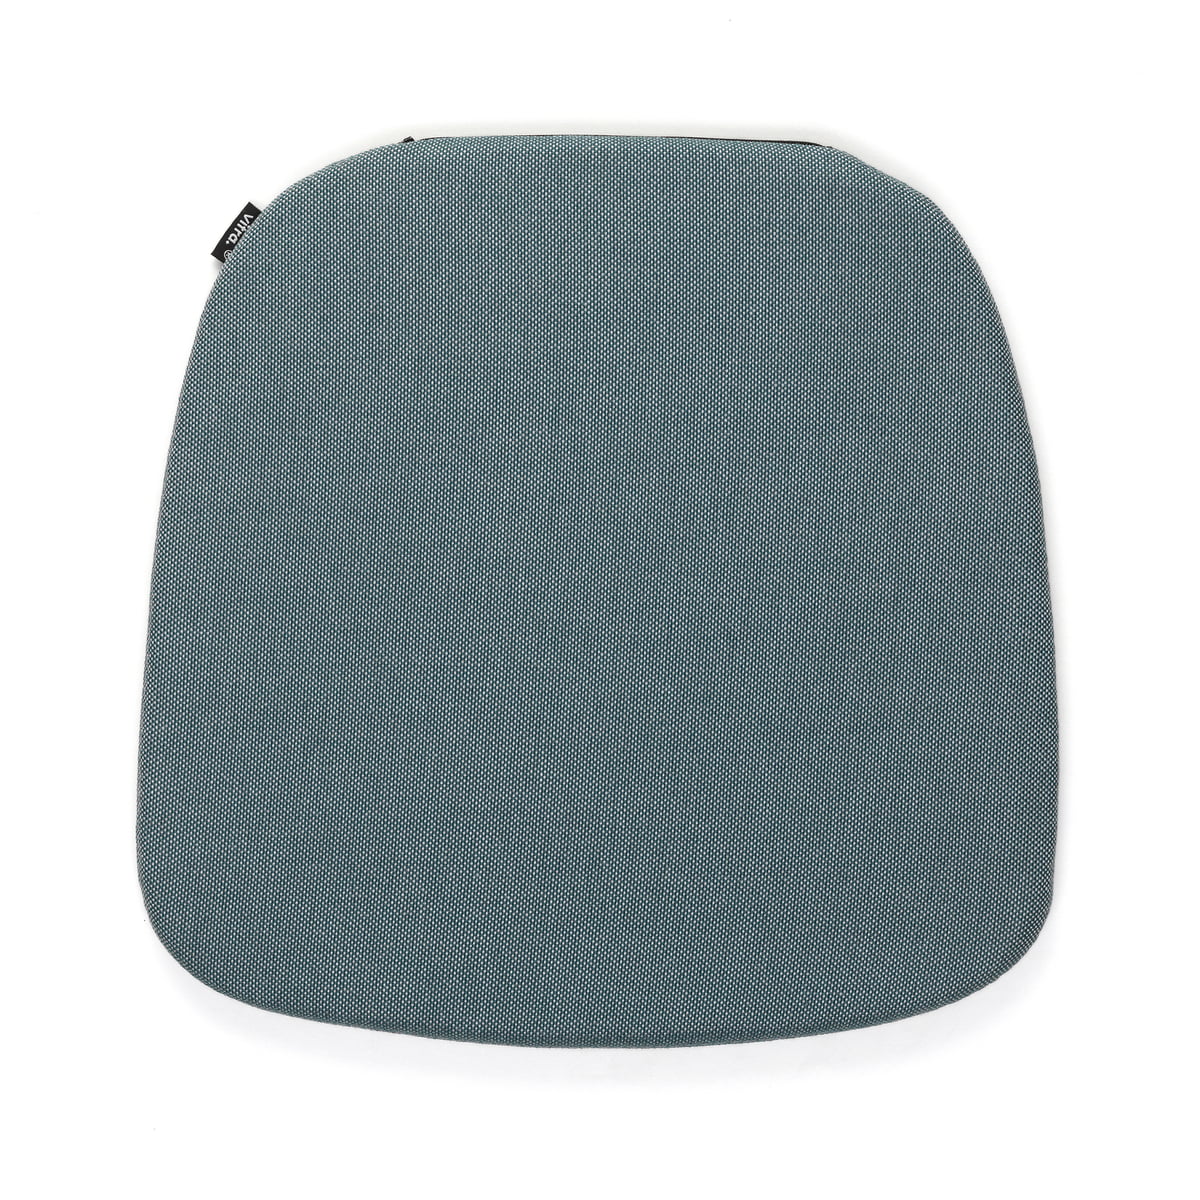 Vitra - Soft Seats Outdoor Seat cushion